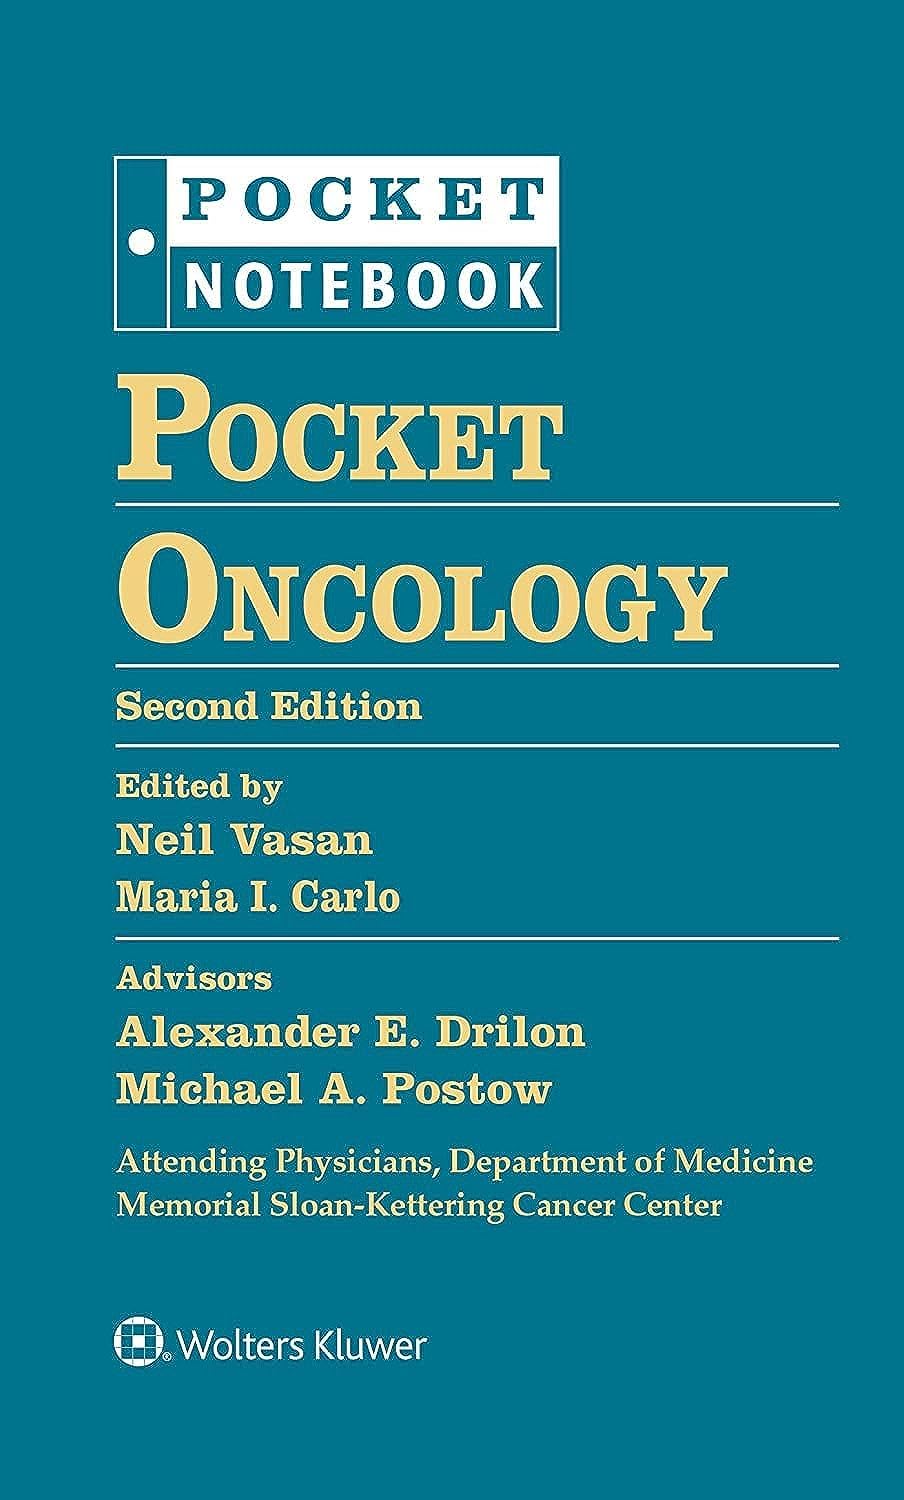 Pocket Oncology (Pocket Notebook), 2nd Edition  by Alexander Drilon